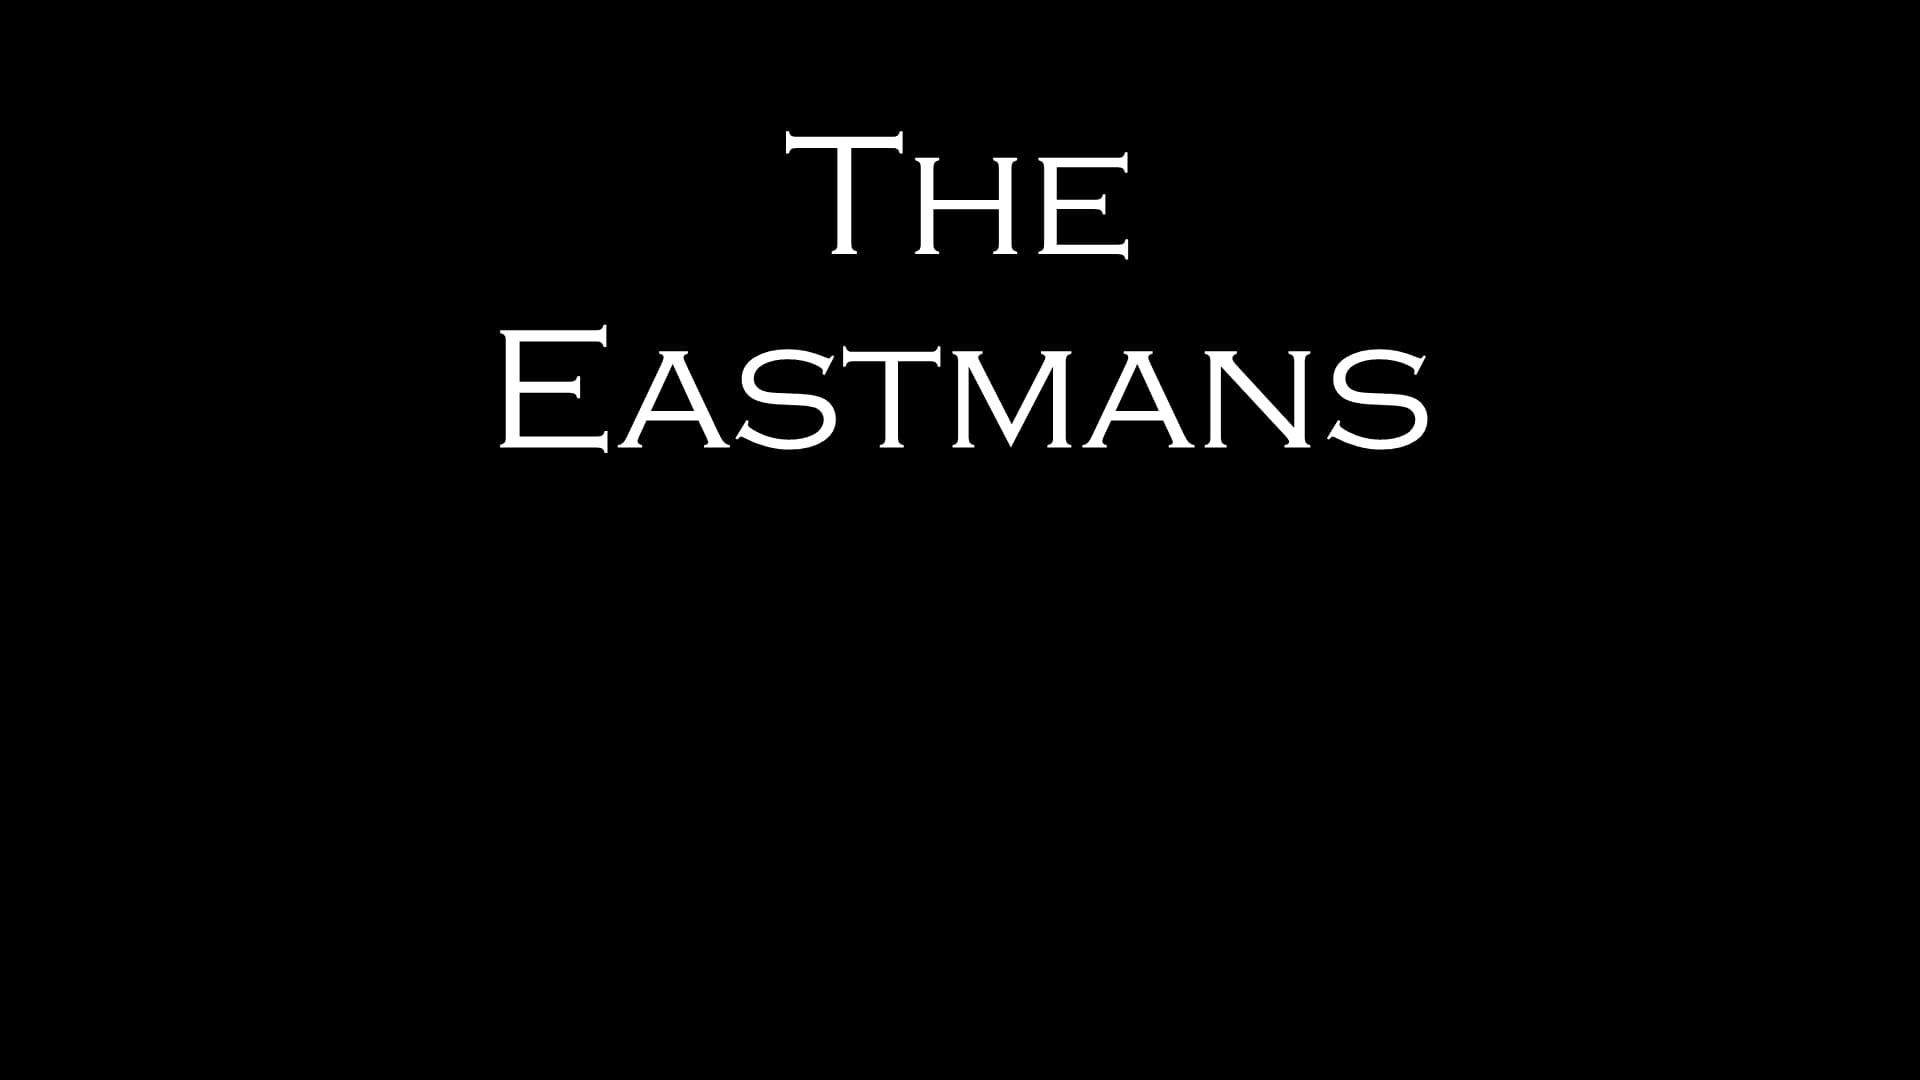 The Eastmans backdrop